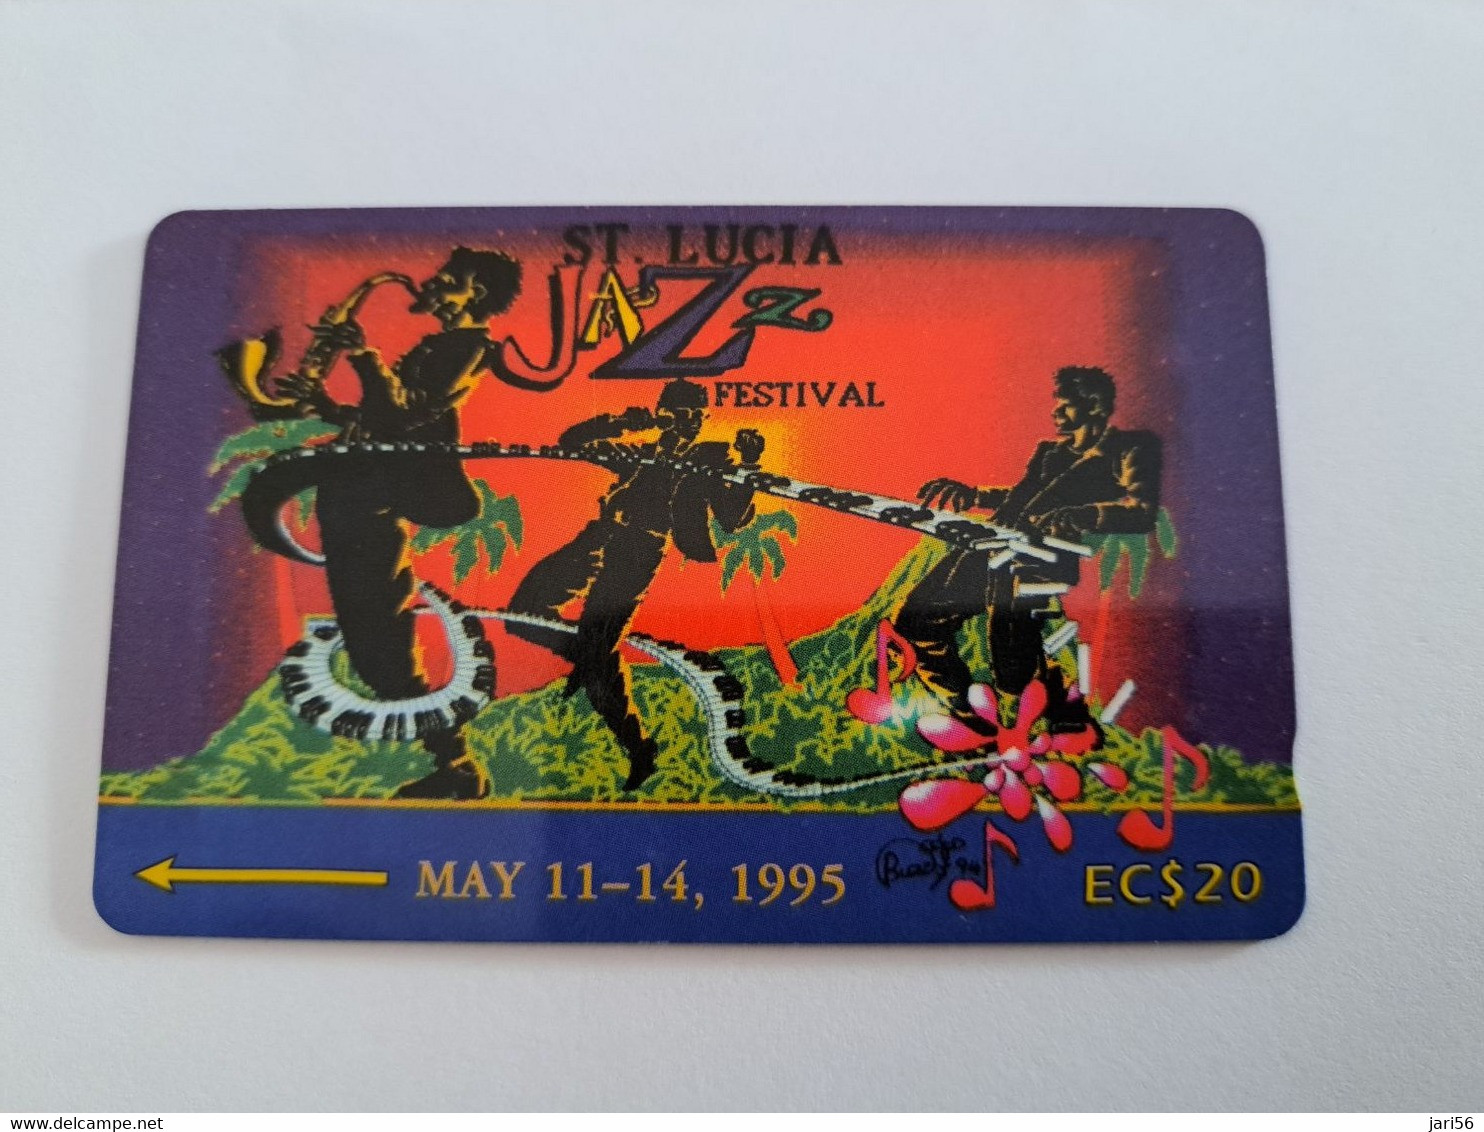 ST LUCIA    $ 20   CABLE & WIRELESS  STL-19A  19CSLA      JAZZ FESTIVAL 1995  Fine Used Card ** 10880** - Santa Lucia